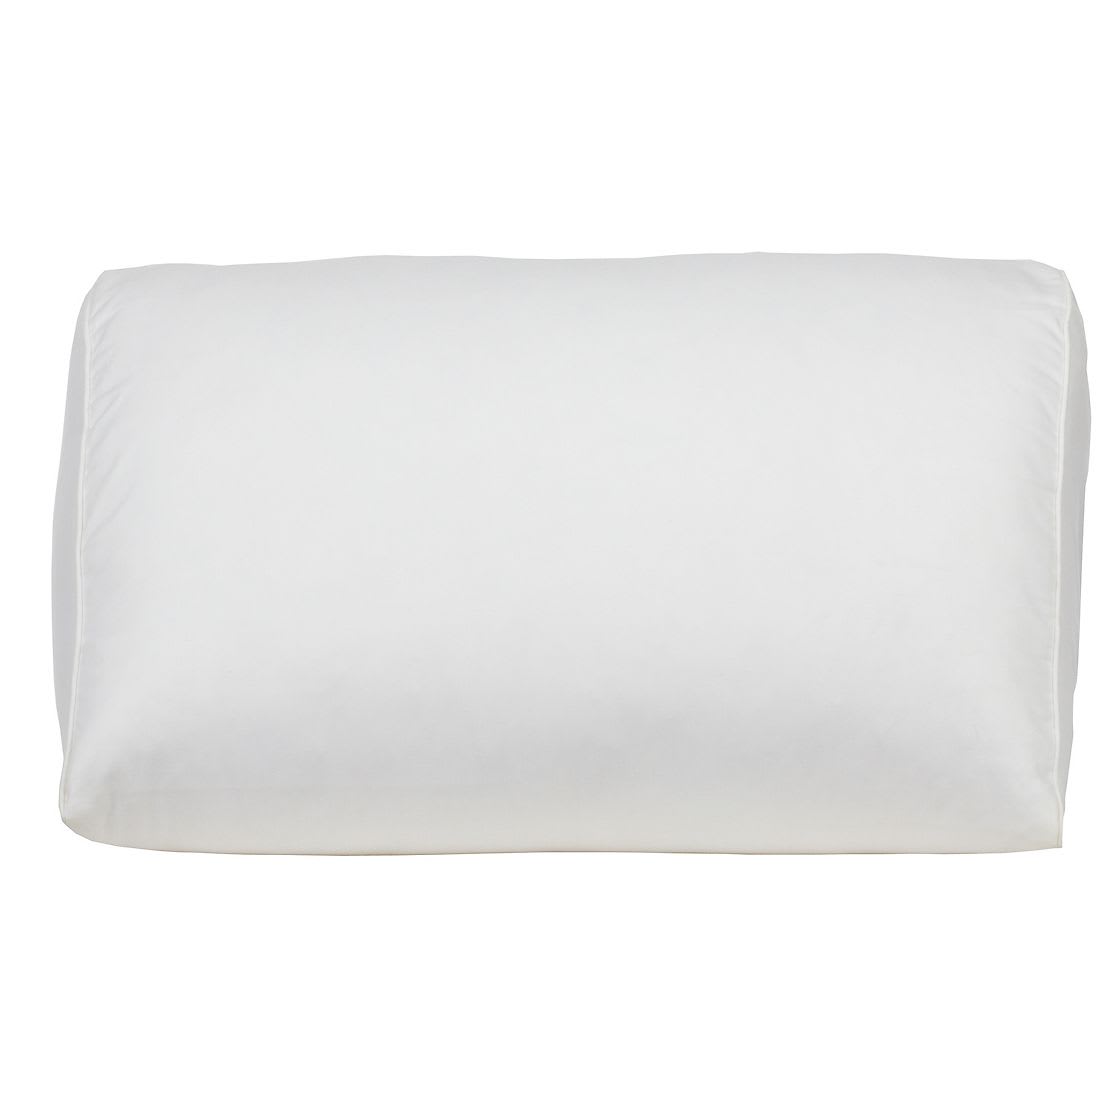 Company Down-Free Medium Density Reading Wedge Pillow Inserts - White